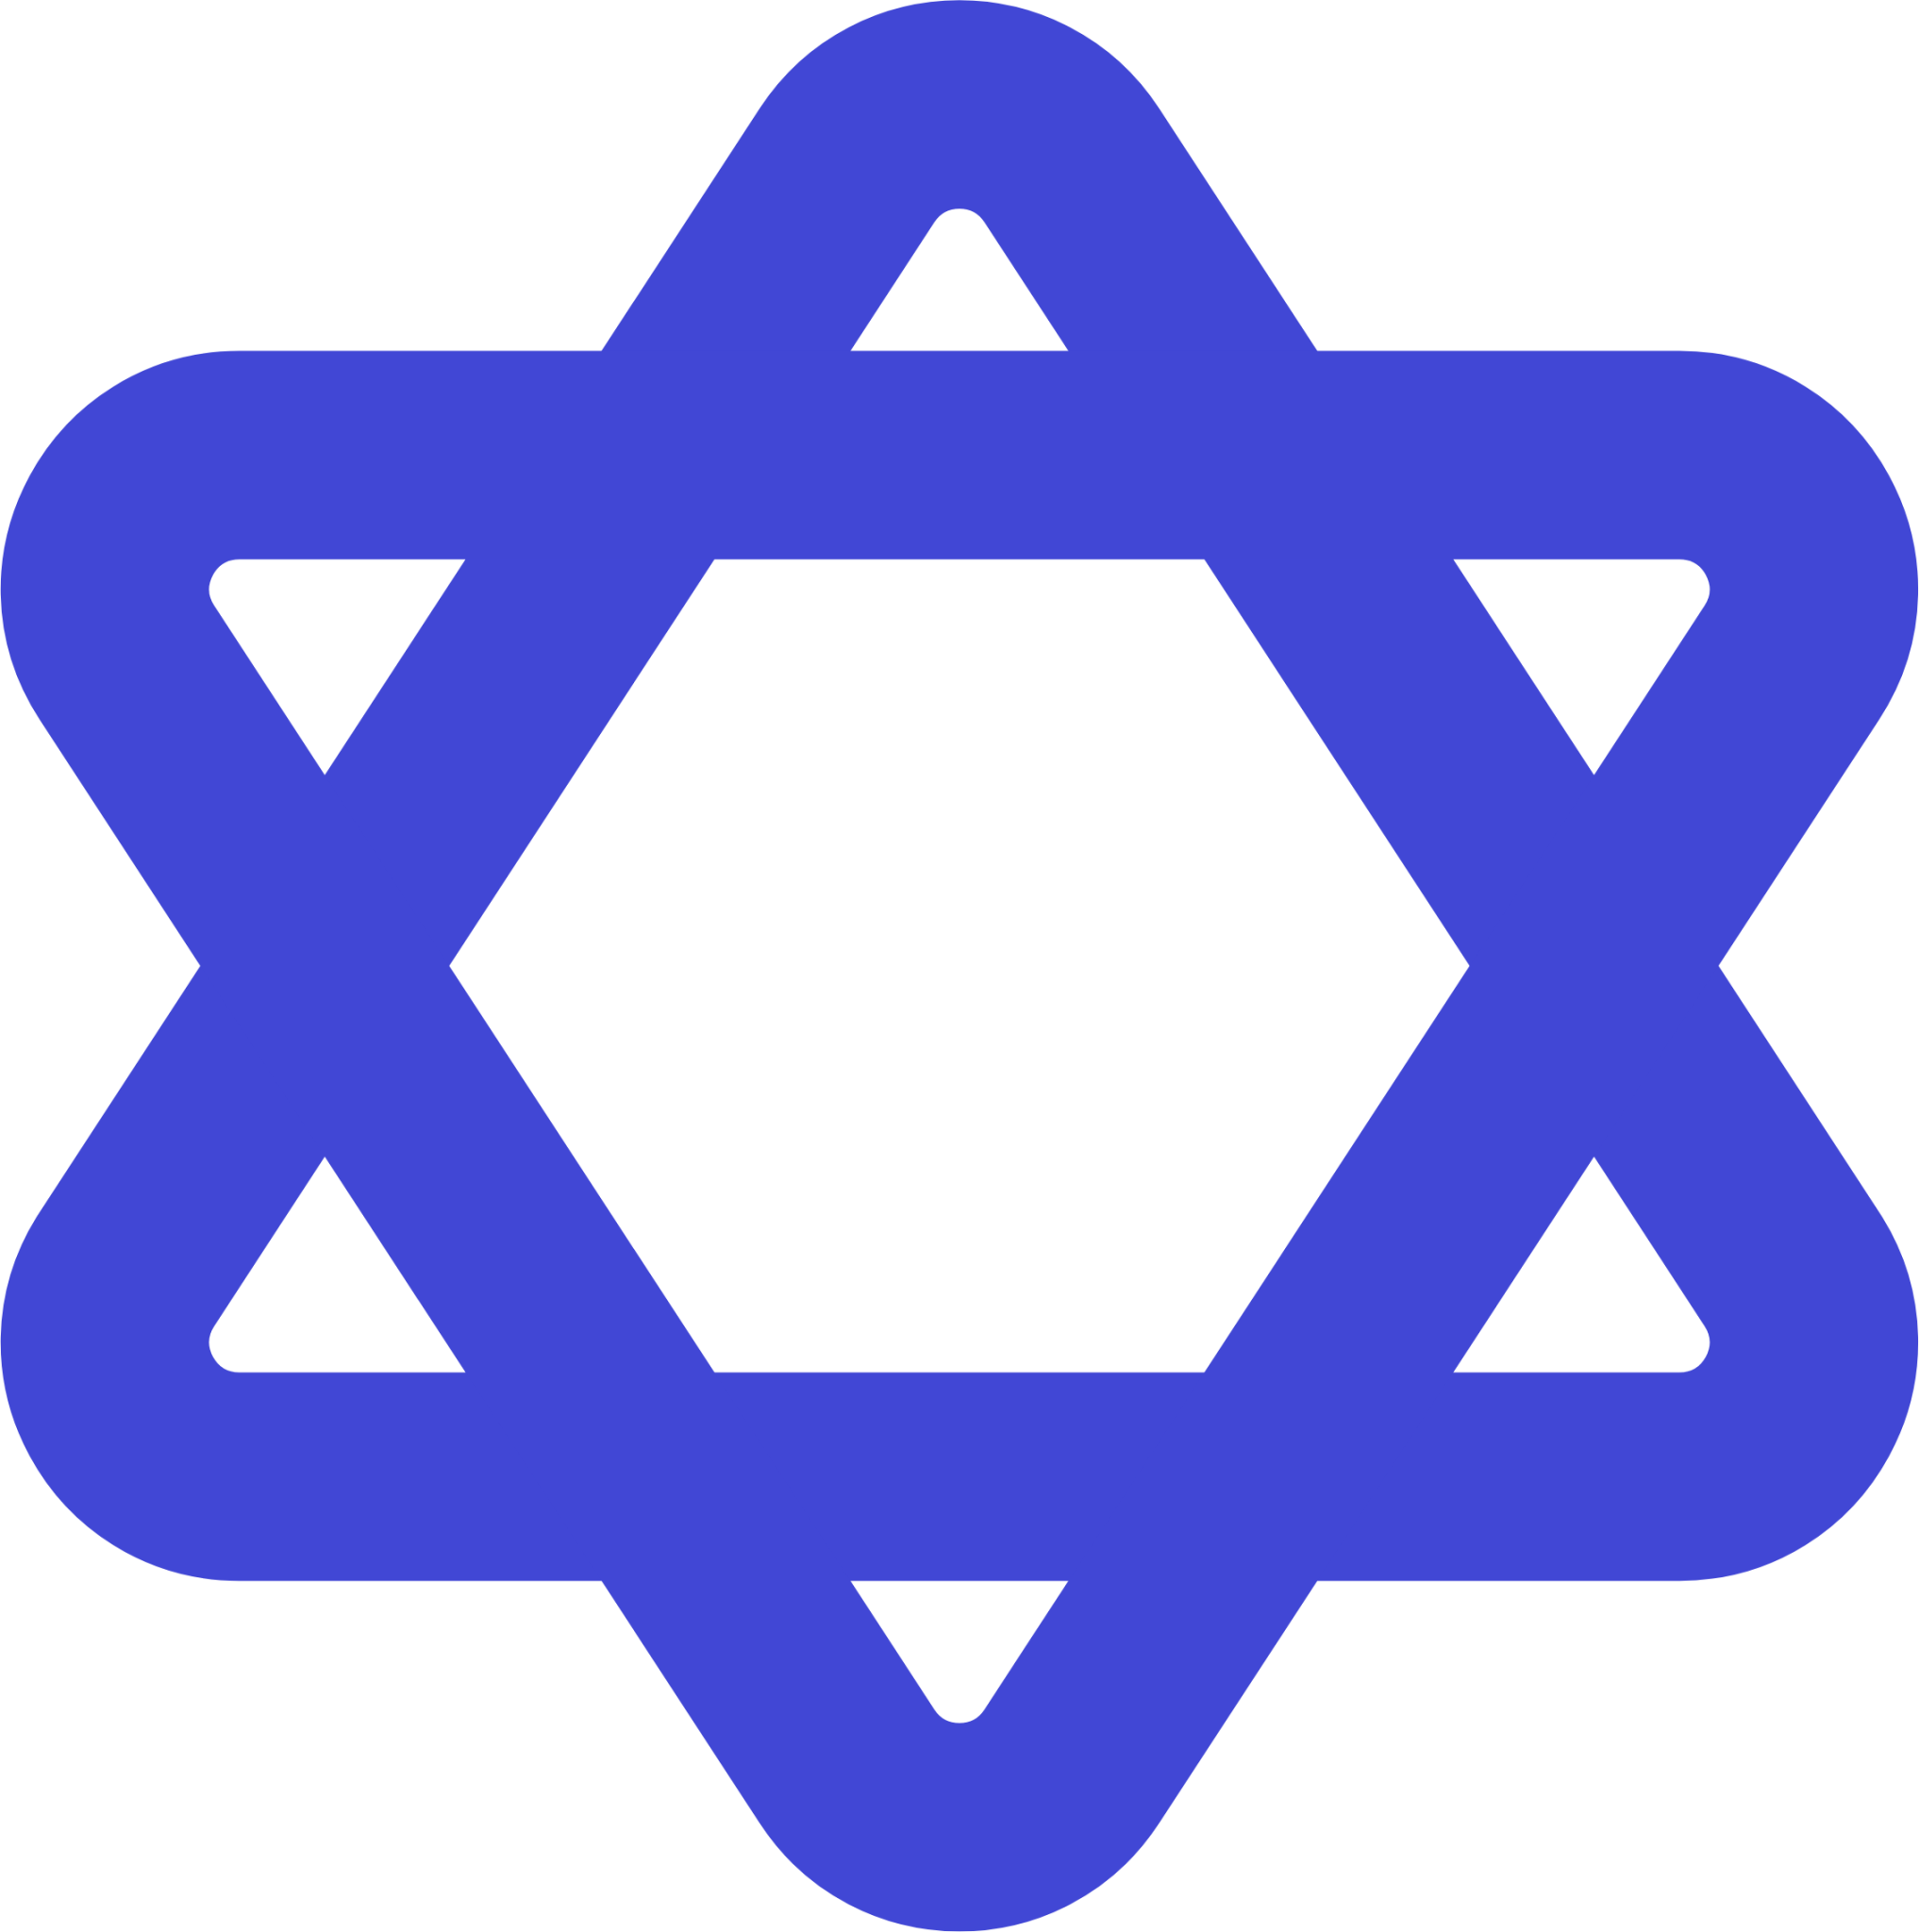 religion hexagram star jew jewish judaism hexagram culture religion david icon